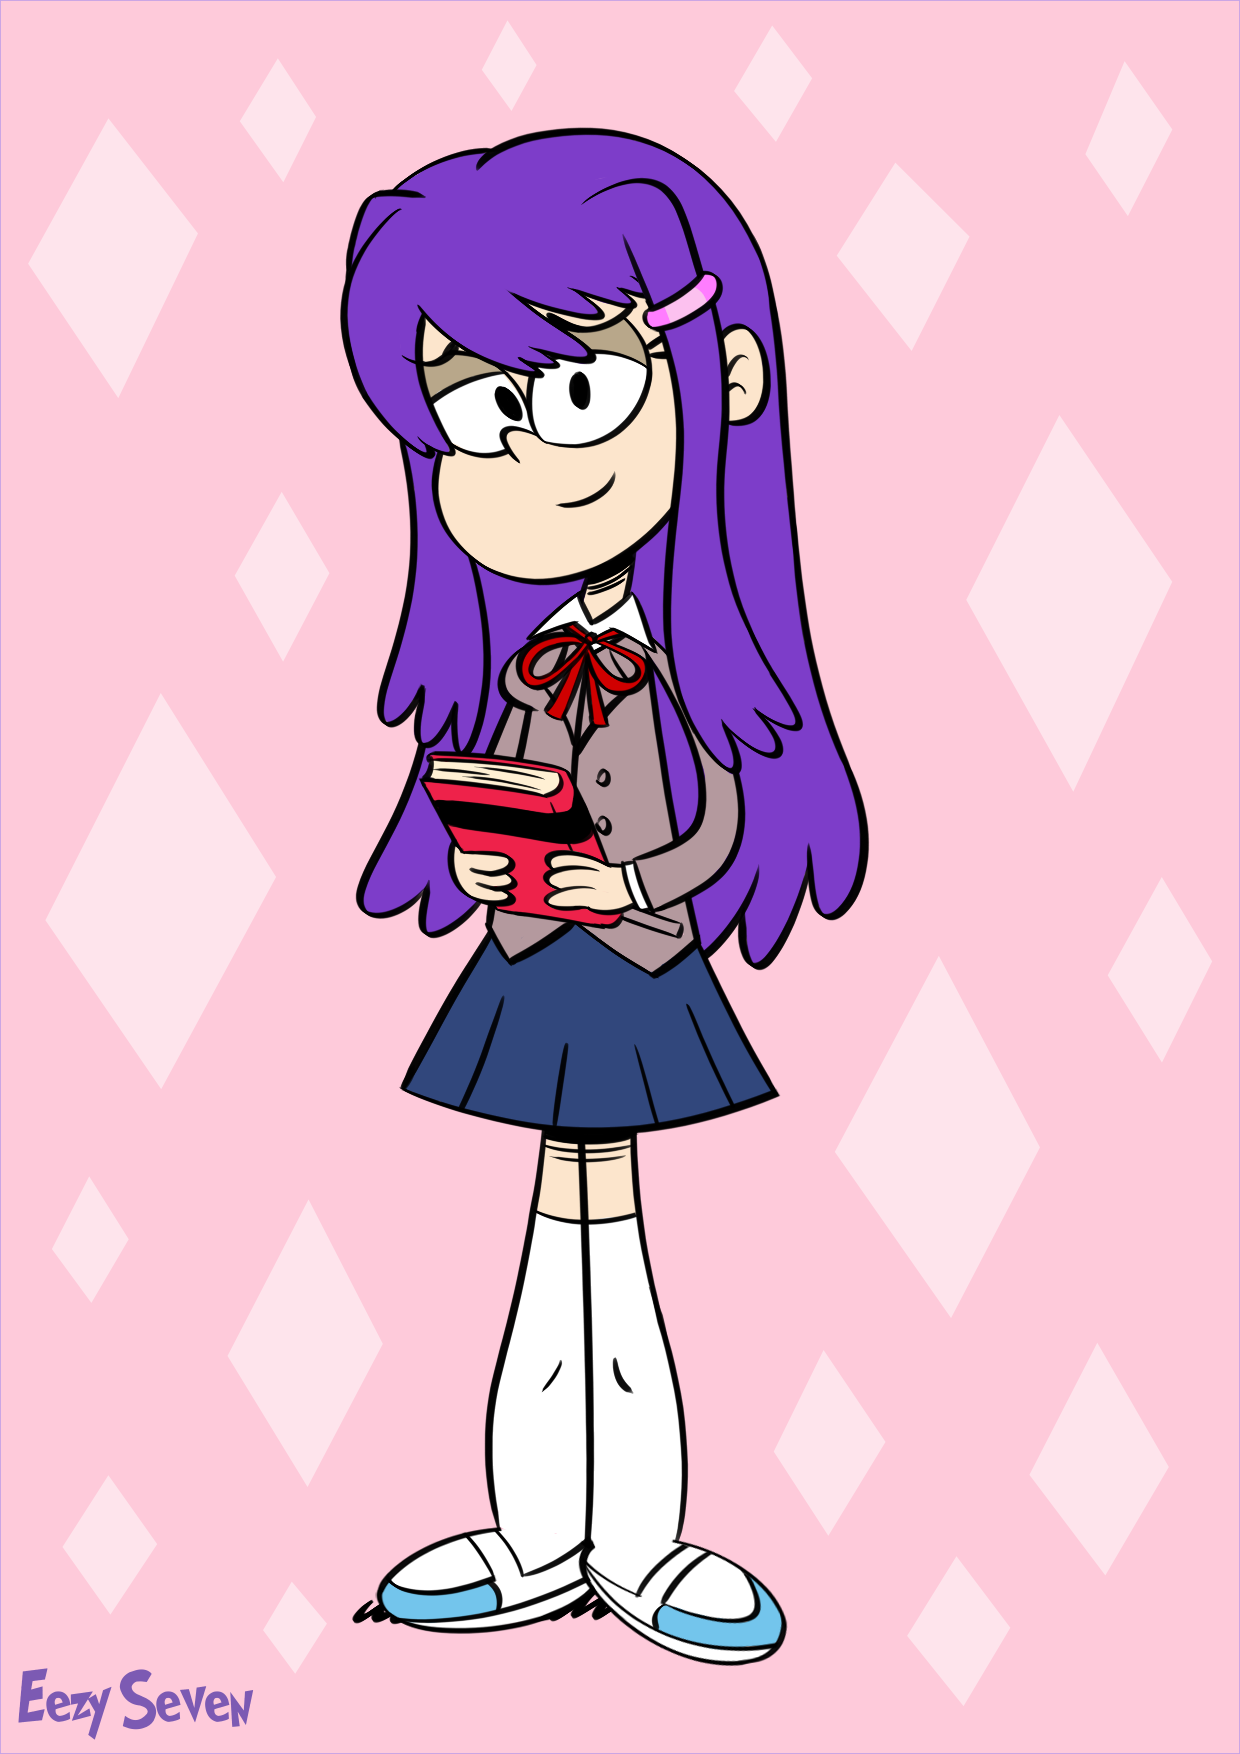 H-Hi I'm Yuri, Doki Doki Literature Club Roleplaying!